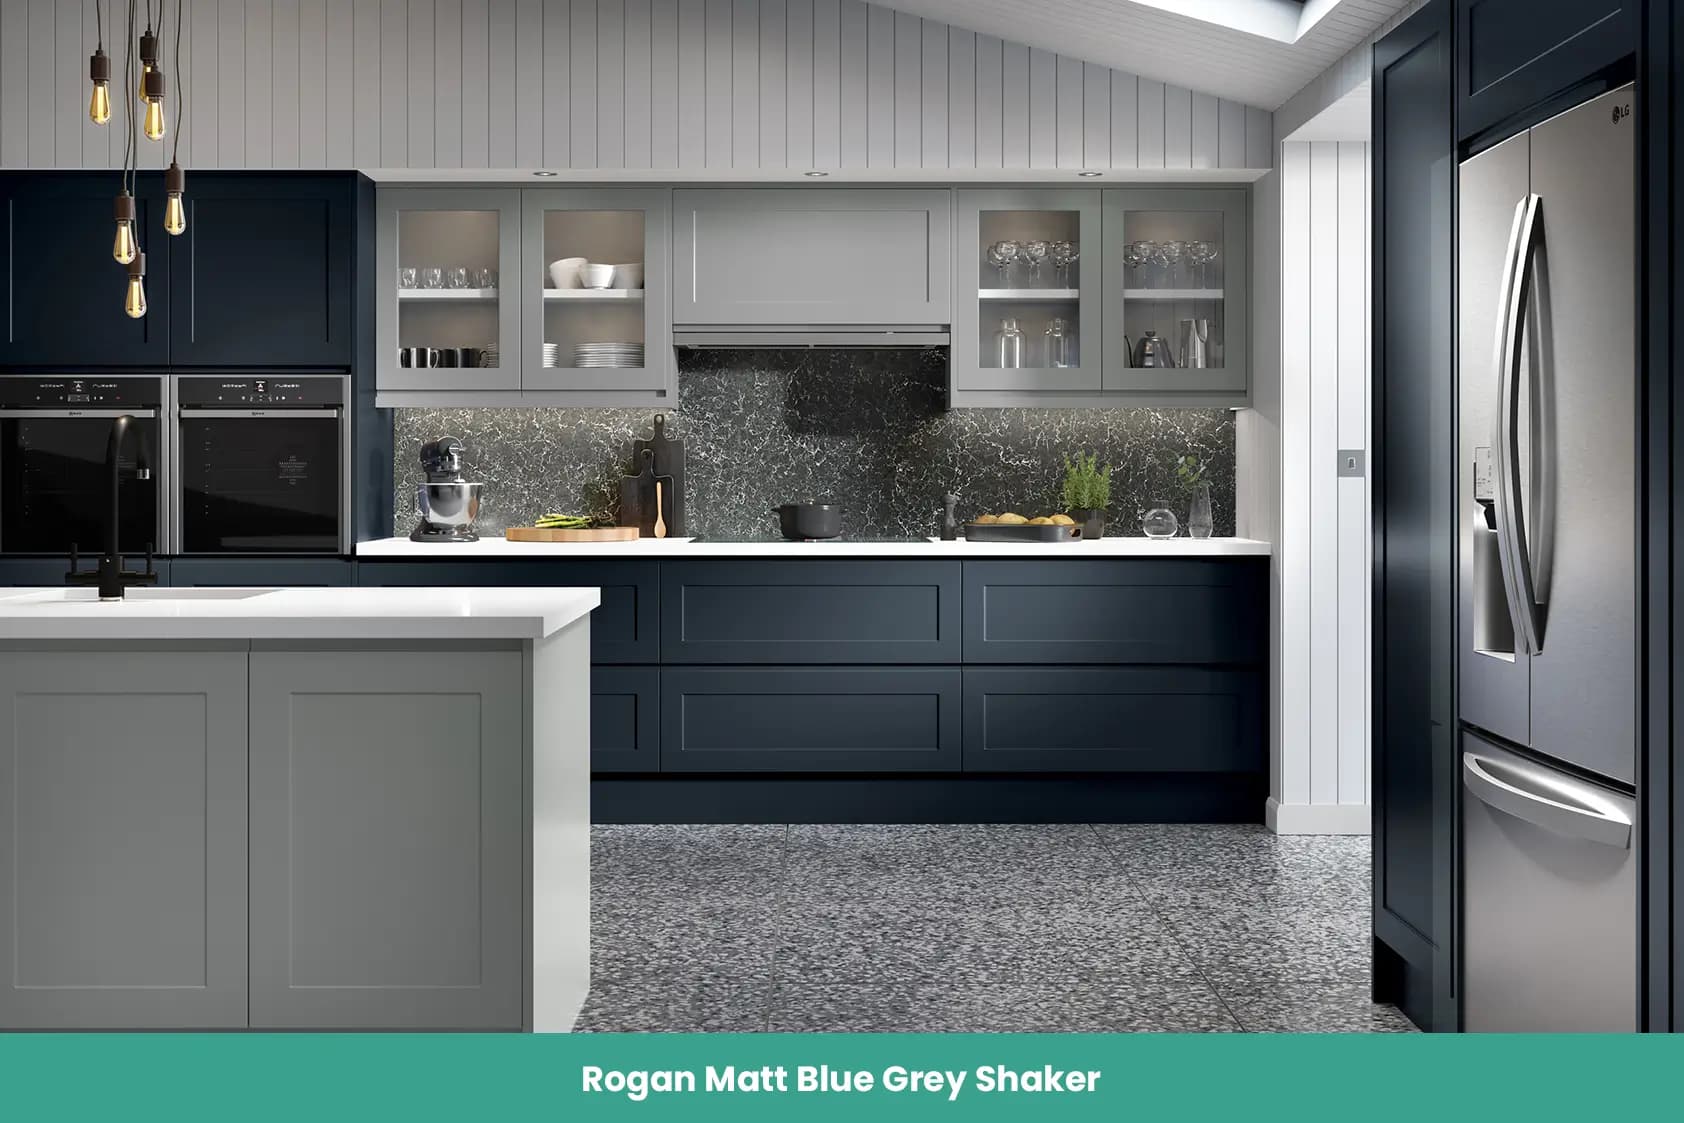 Rogan Matt Blue Grey Shaker Kitchen